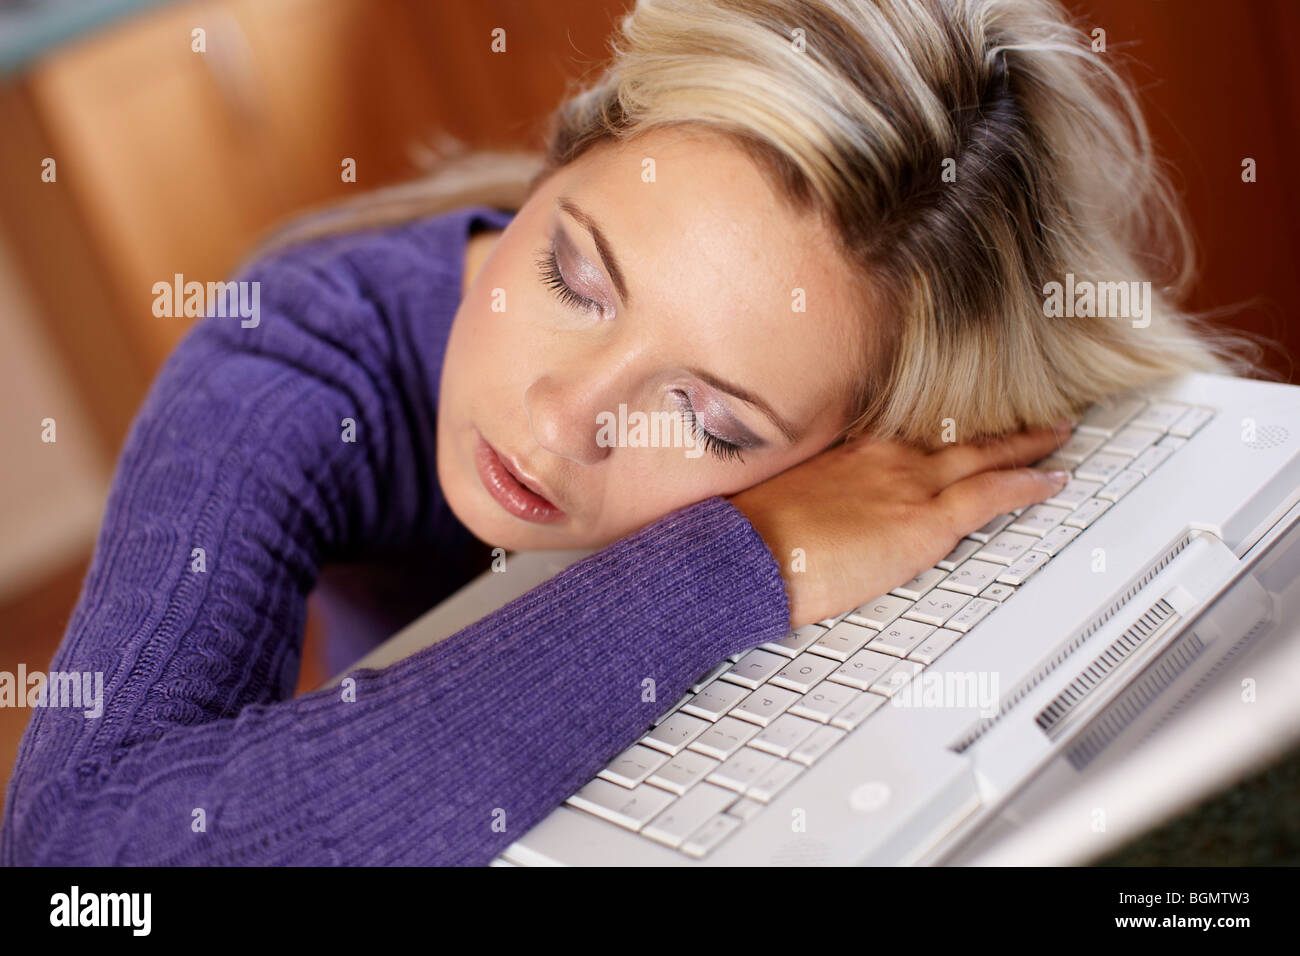 Girl asleep on laptop Stock Photo